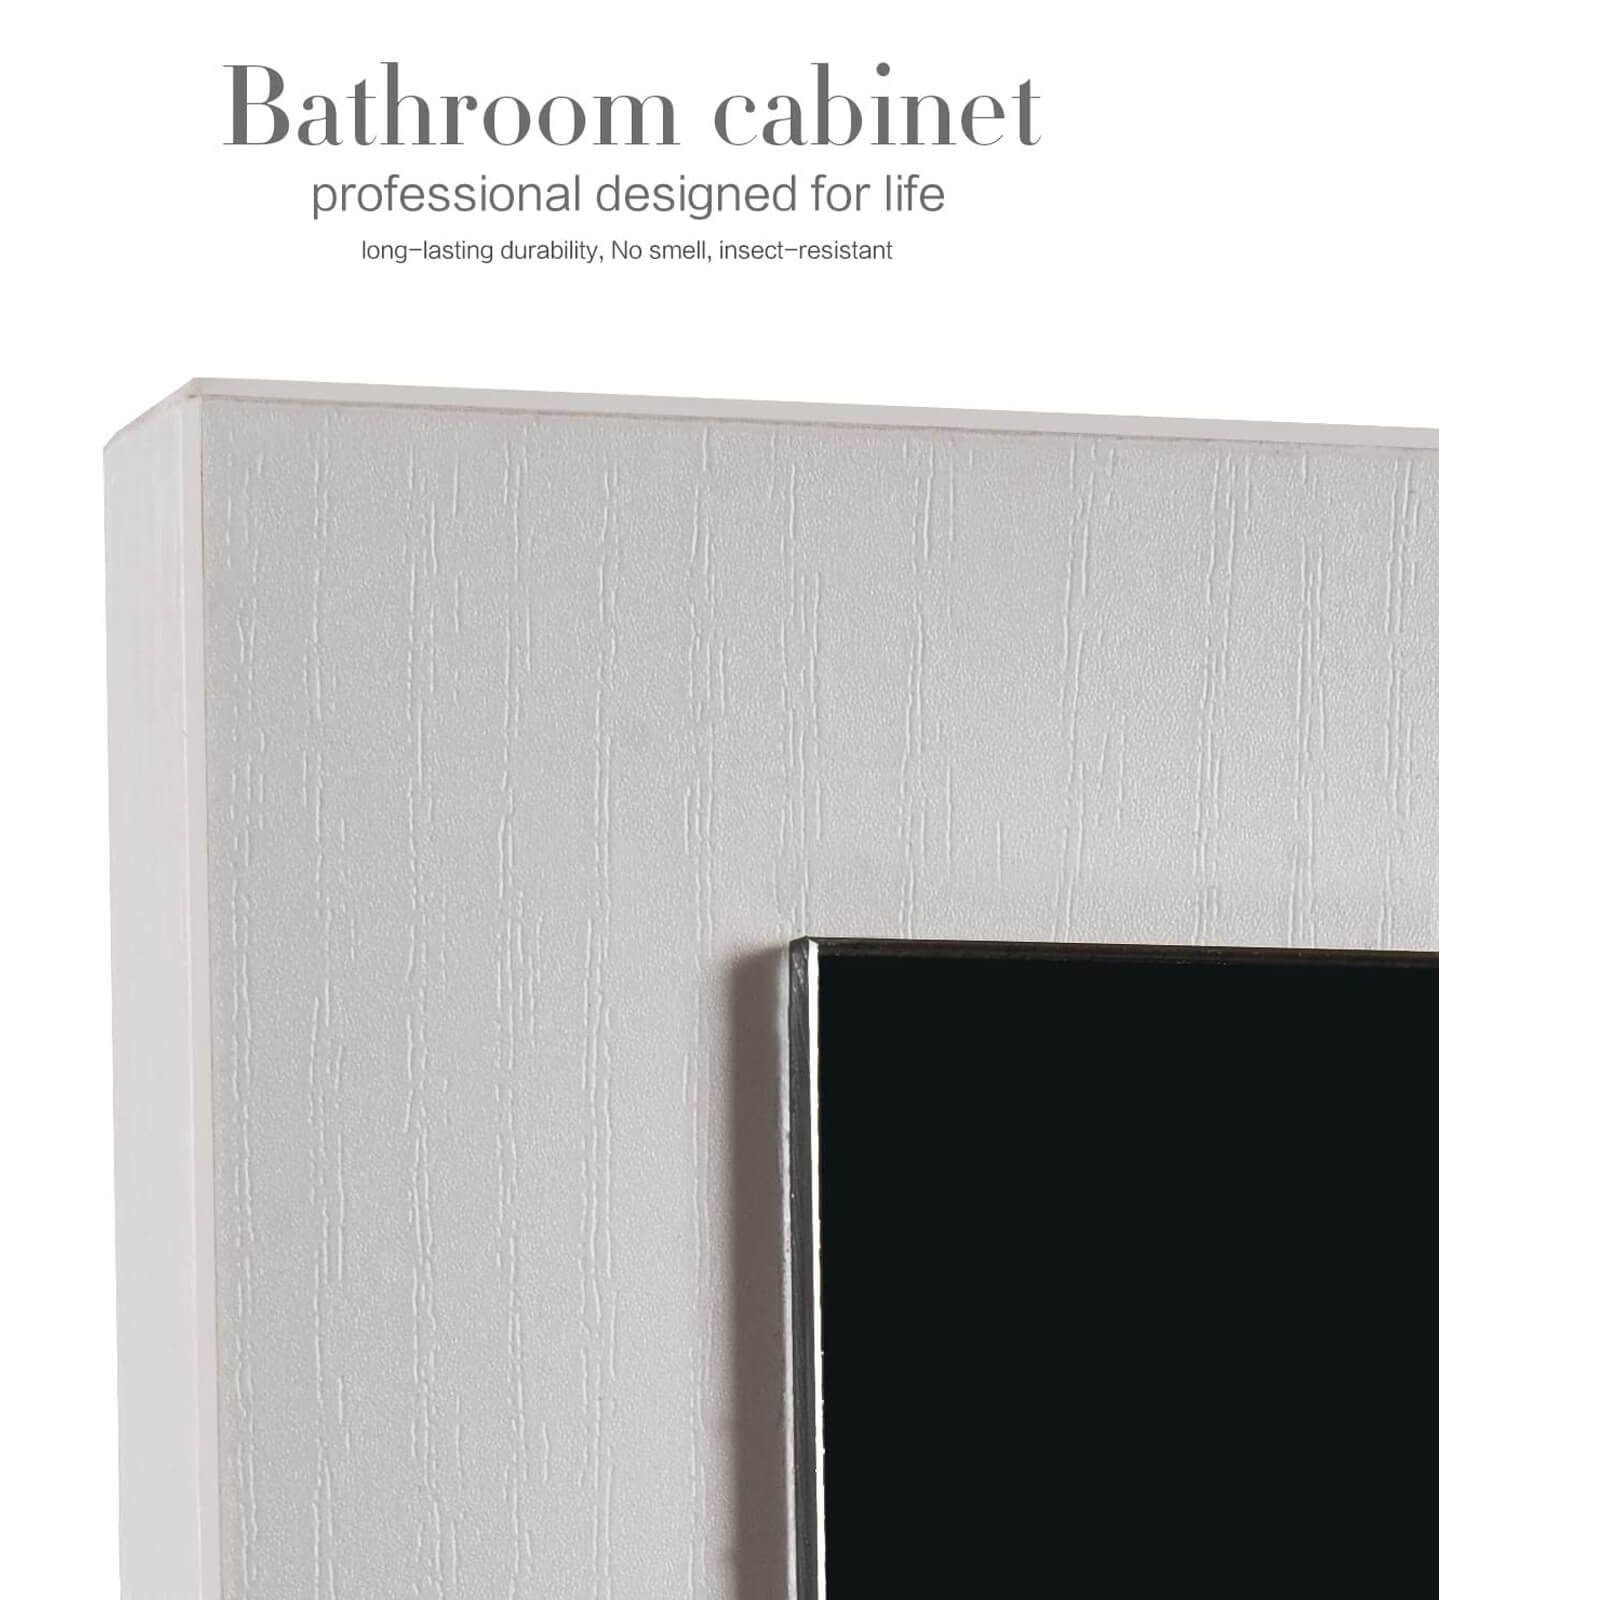 Elecwish 24" Wood Bathroom Vanity Stand Pedestal Cabinet has premium material